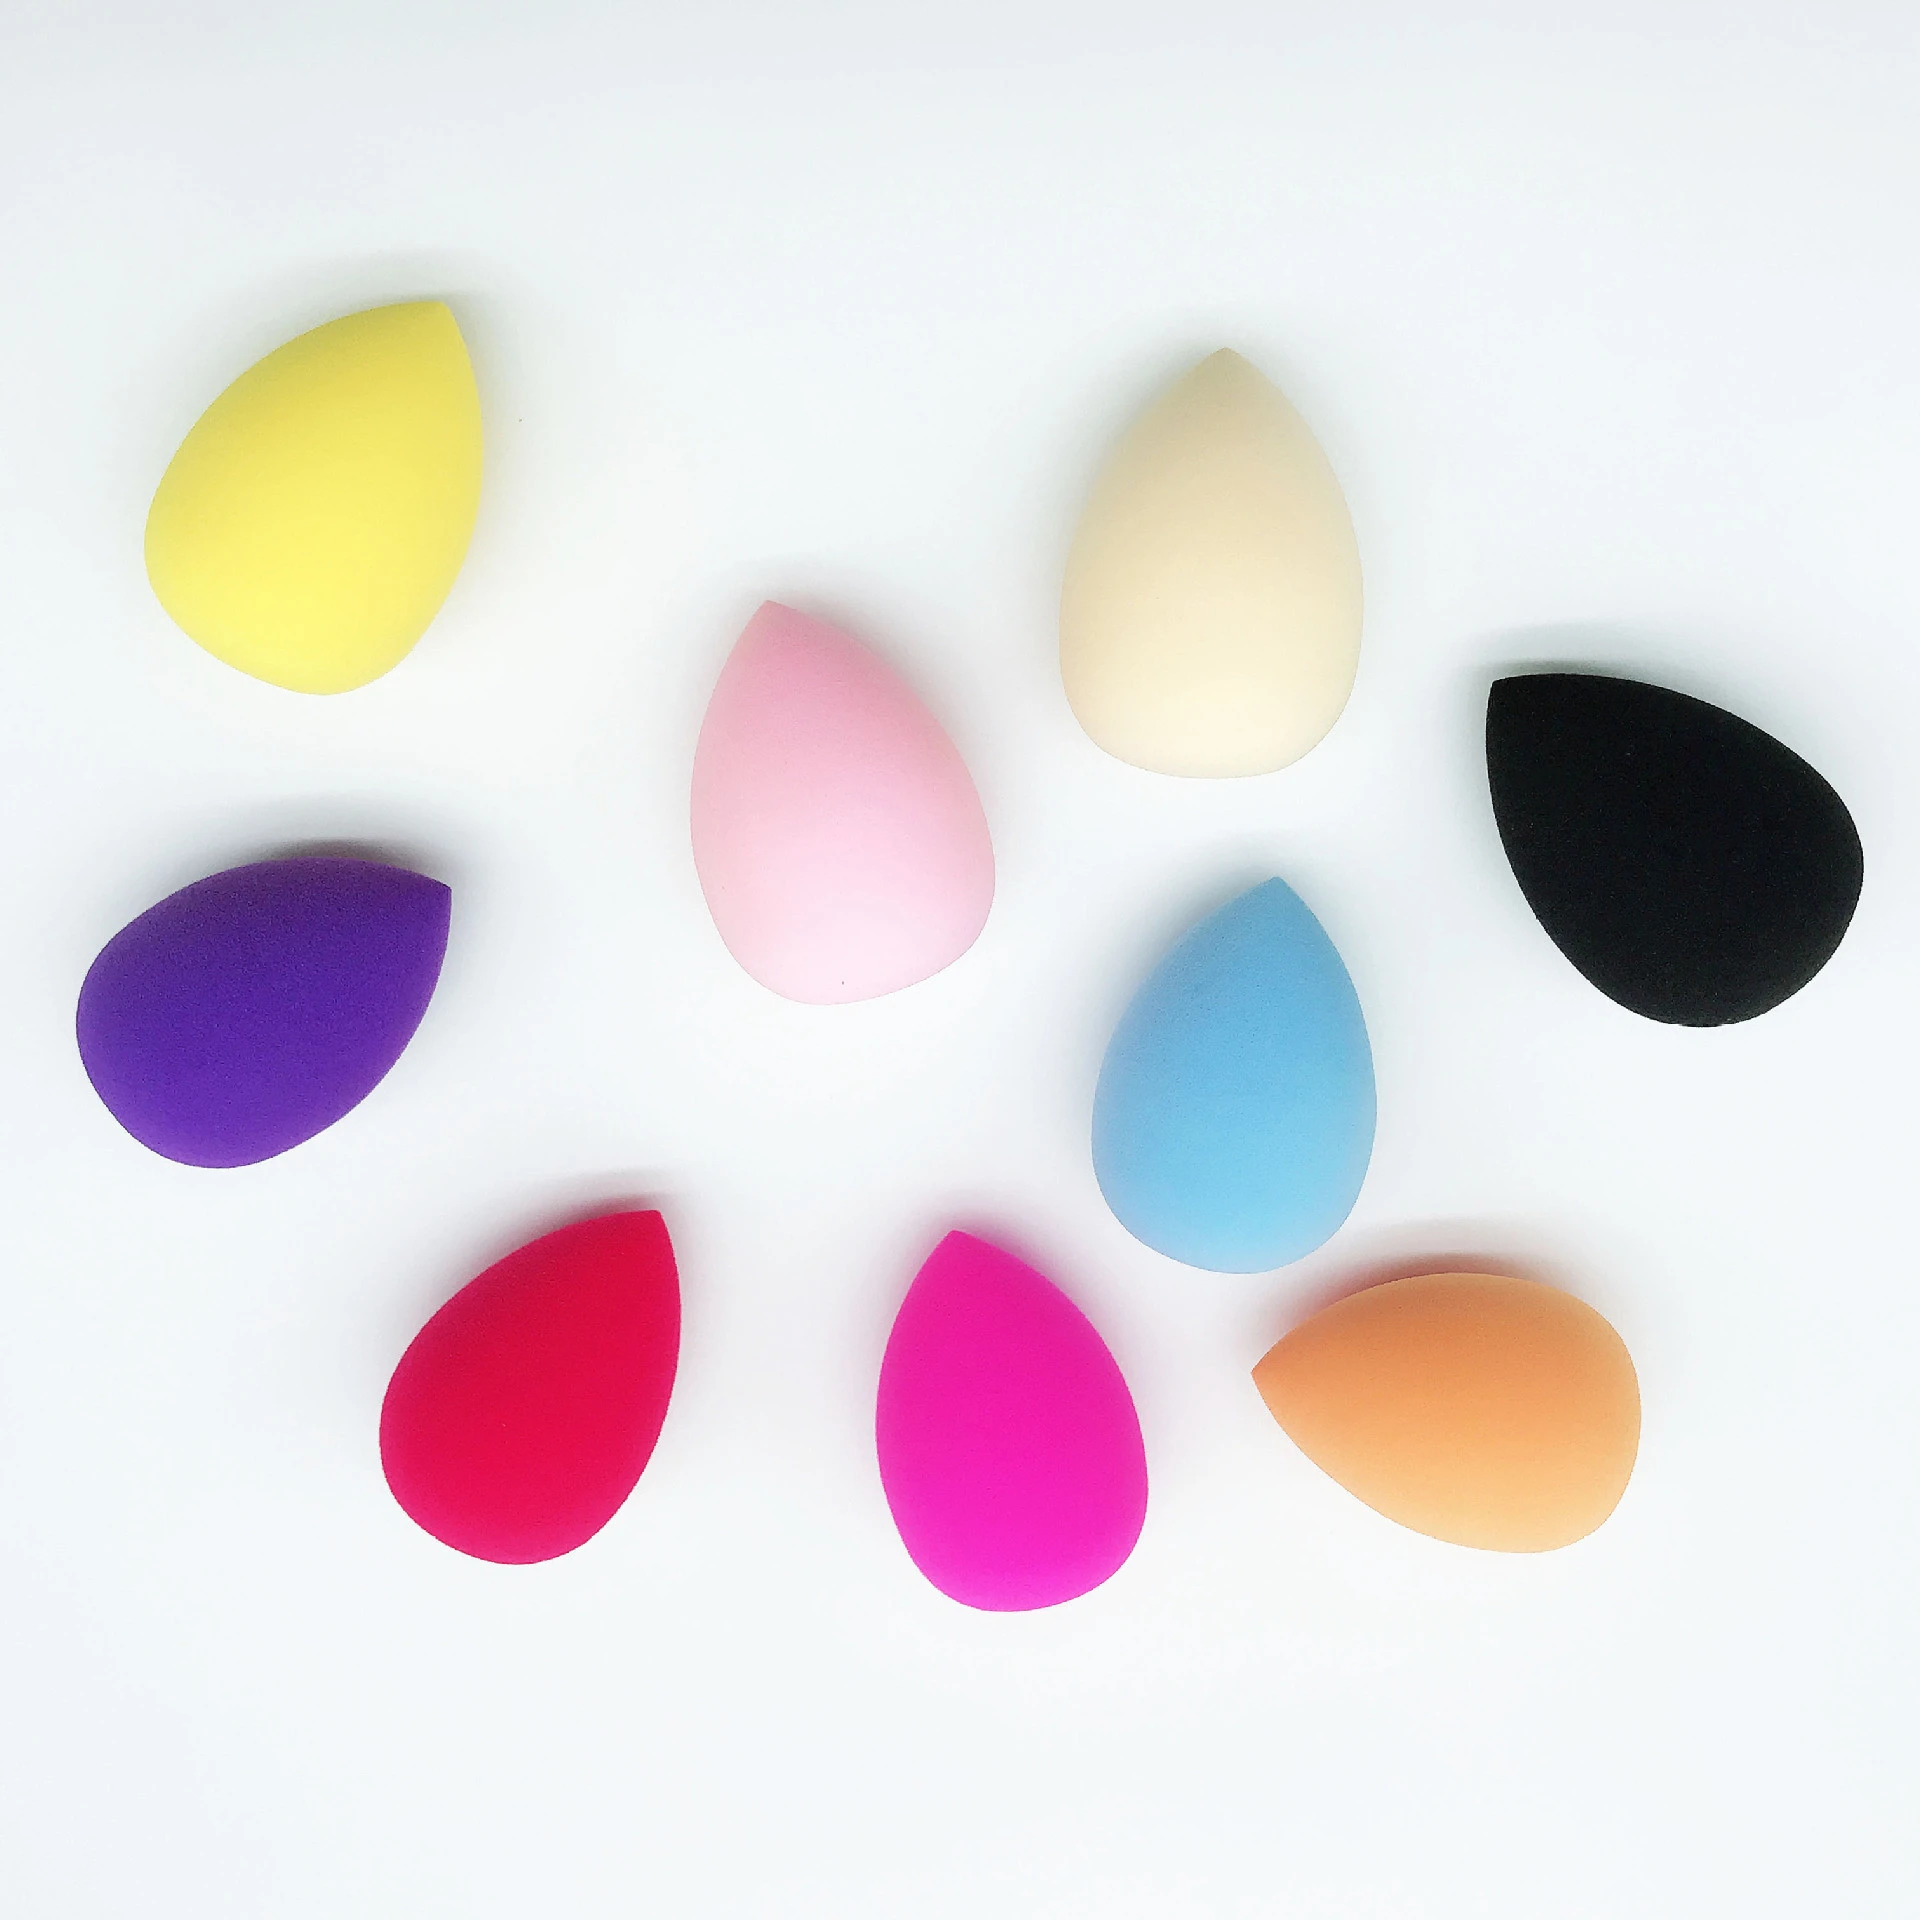 9-Color Makeup Beauty Foundation Blending Sponge Perfect for Liquid, Cream, and Powder, Multi-colored Makeup Sponge